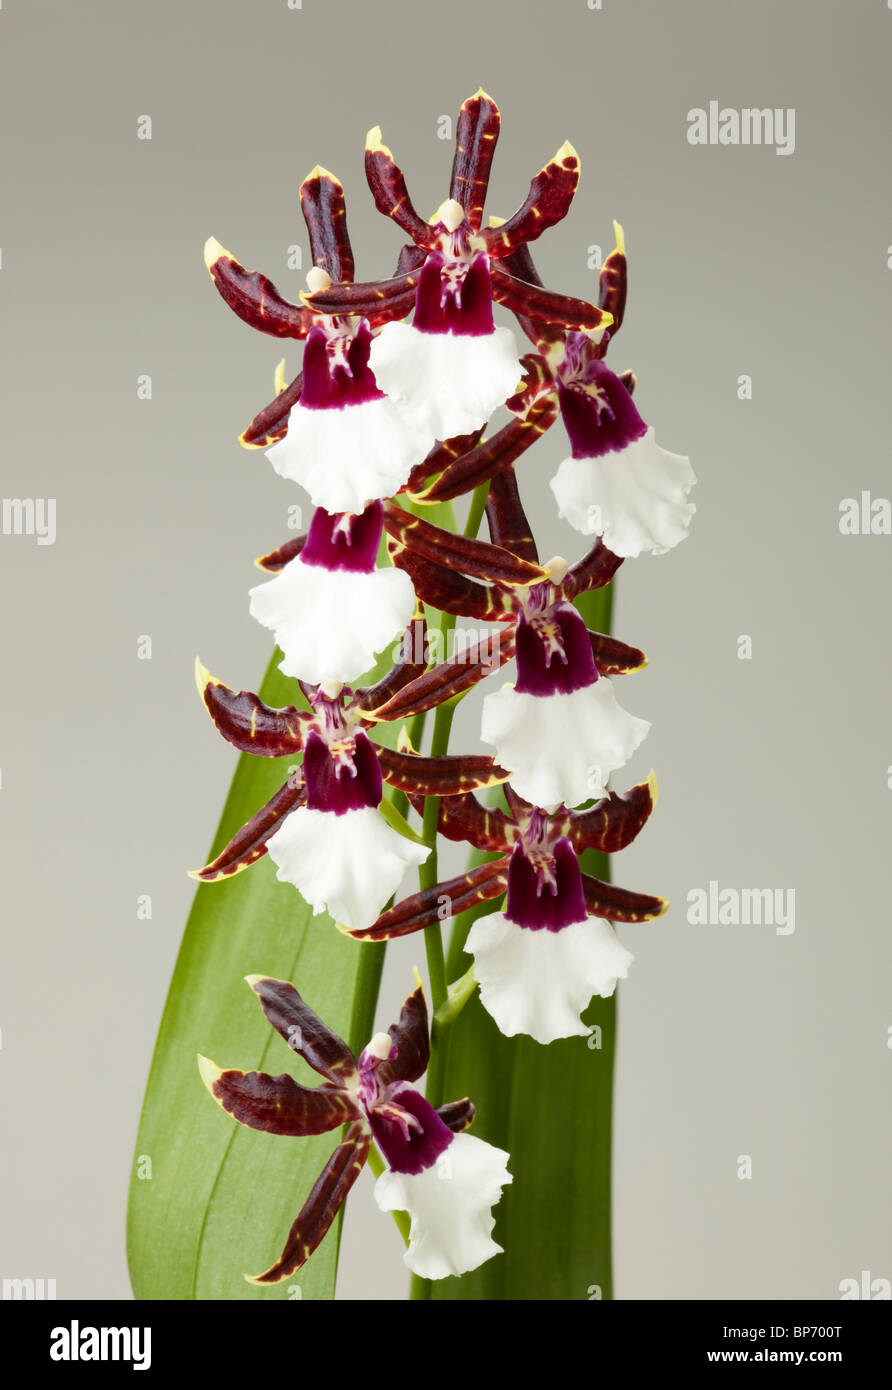 Orquidea cambria fotografías e imágenes de alta resolución - Alamy